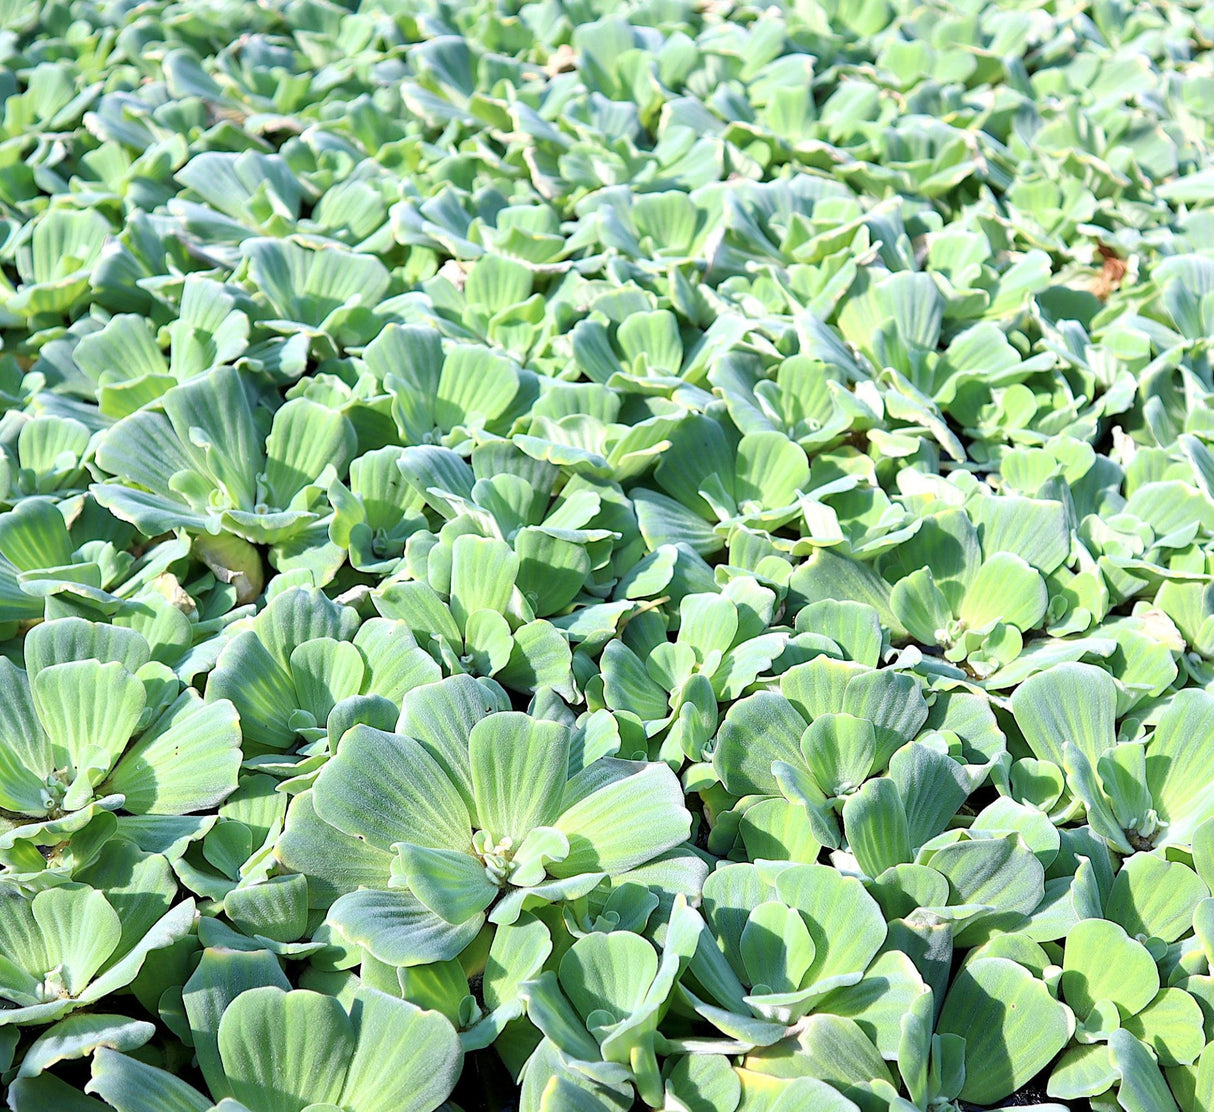 Water lettuce "Pistia stratiotes"